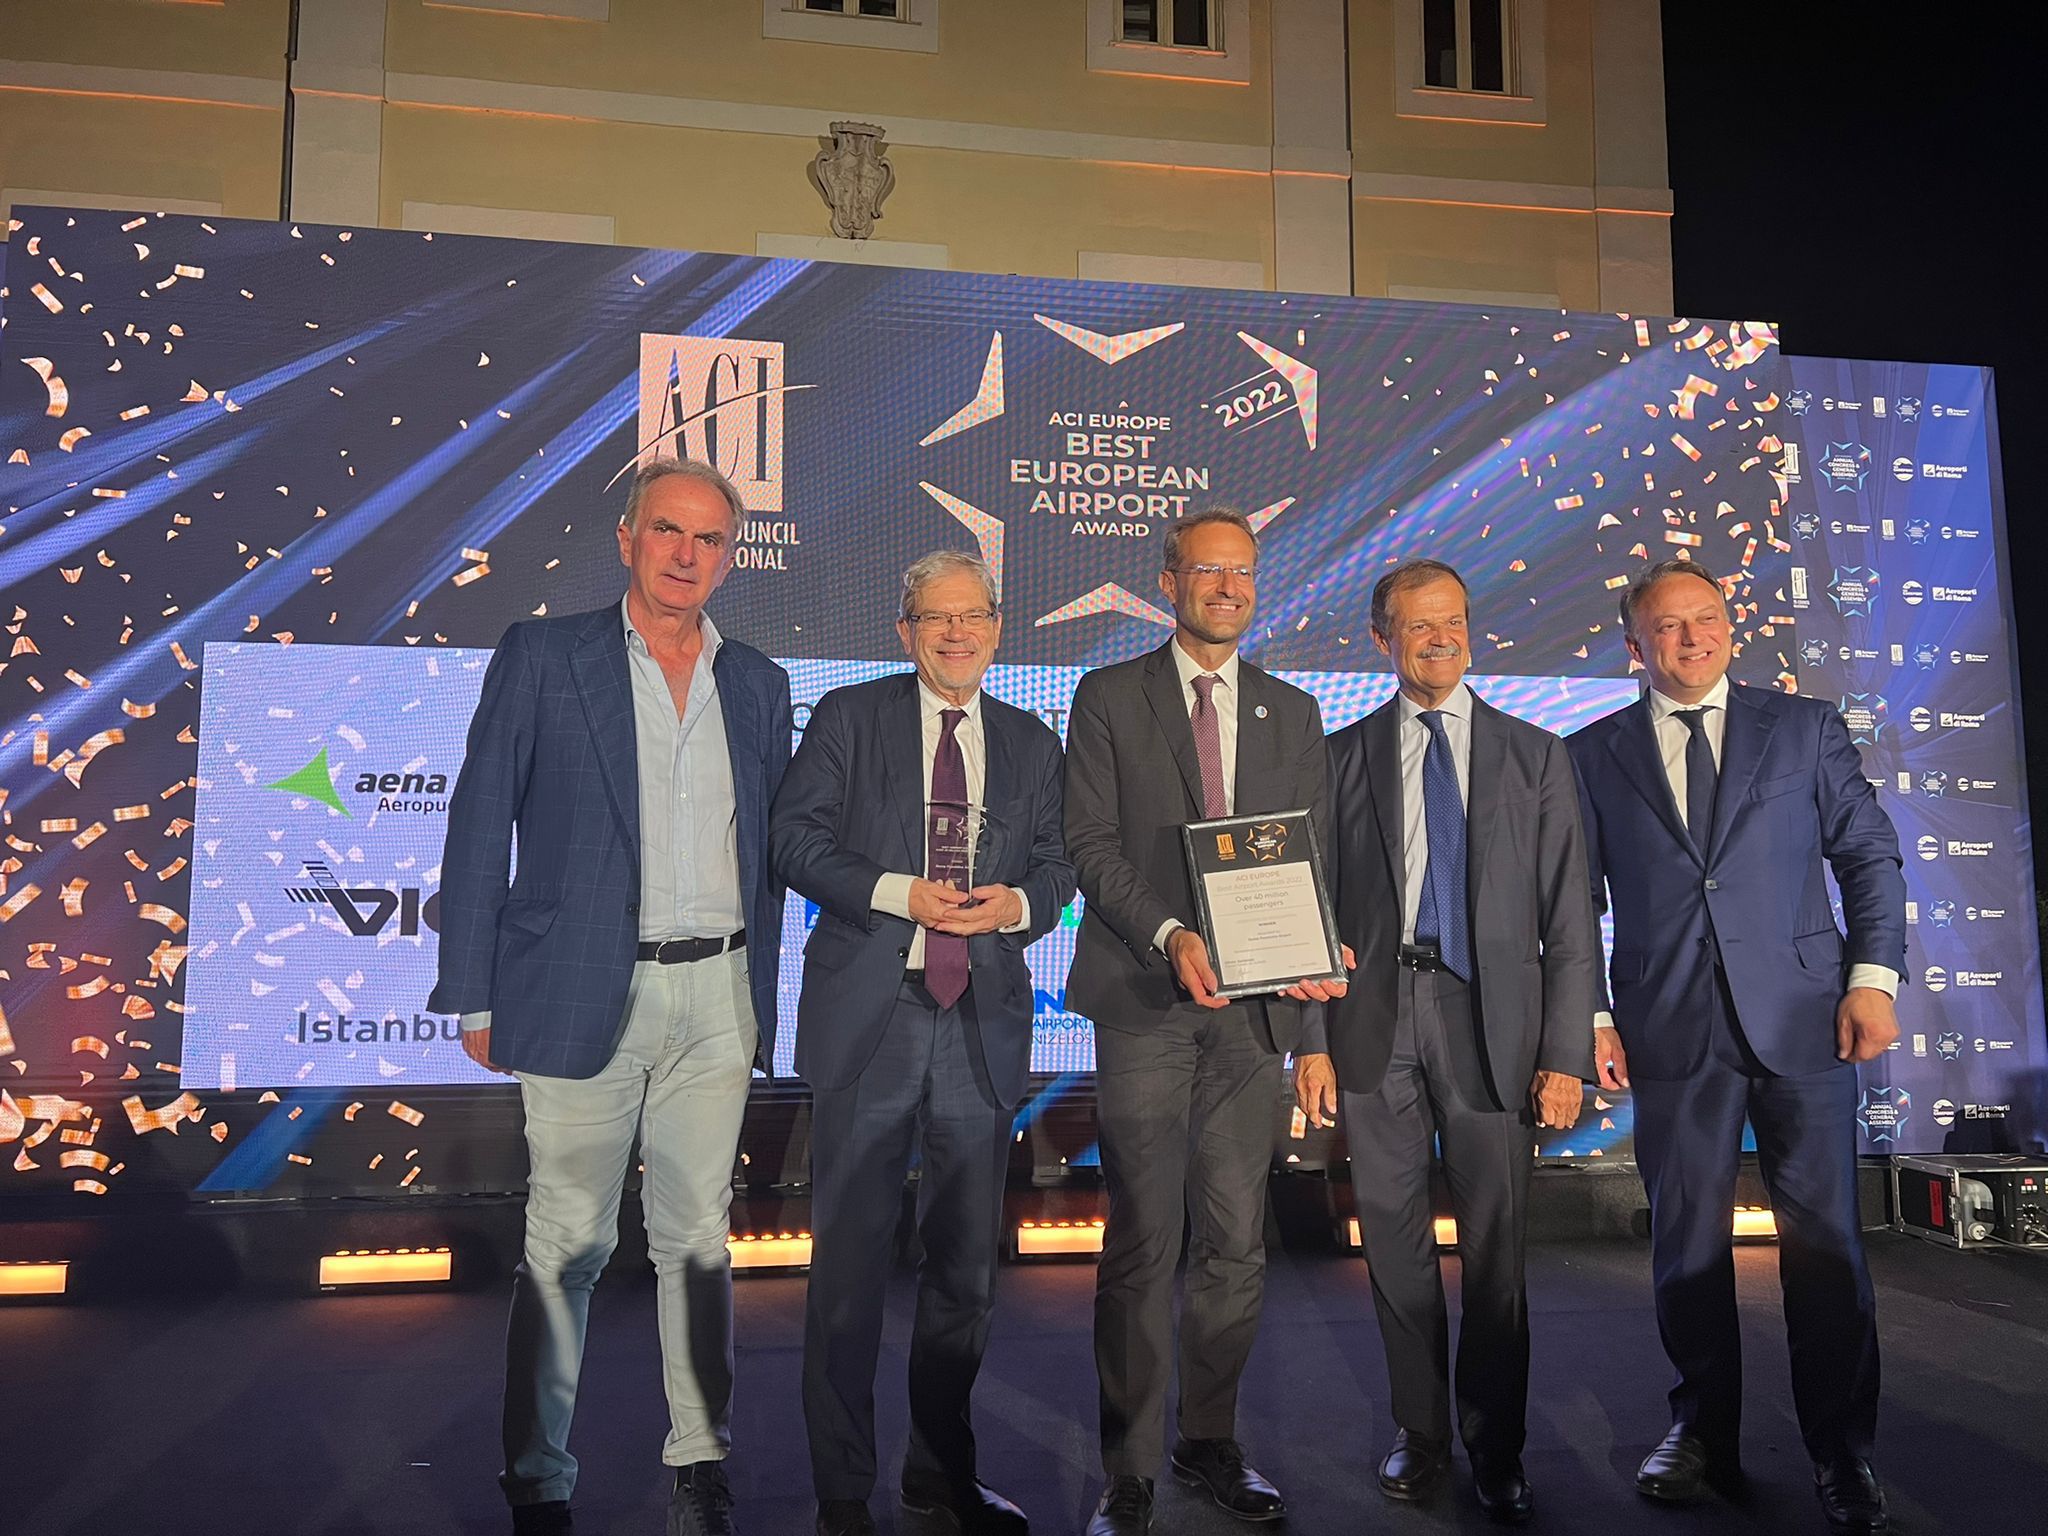 ADR - Aci Europe Best Airport Awards 2022